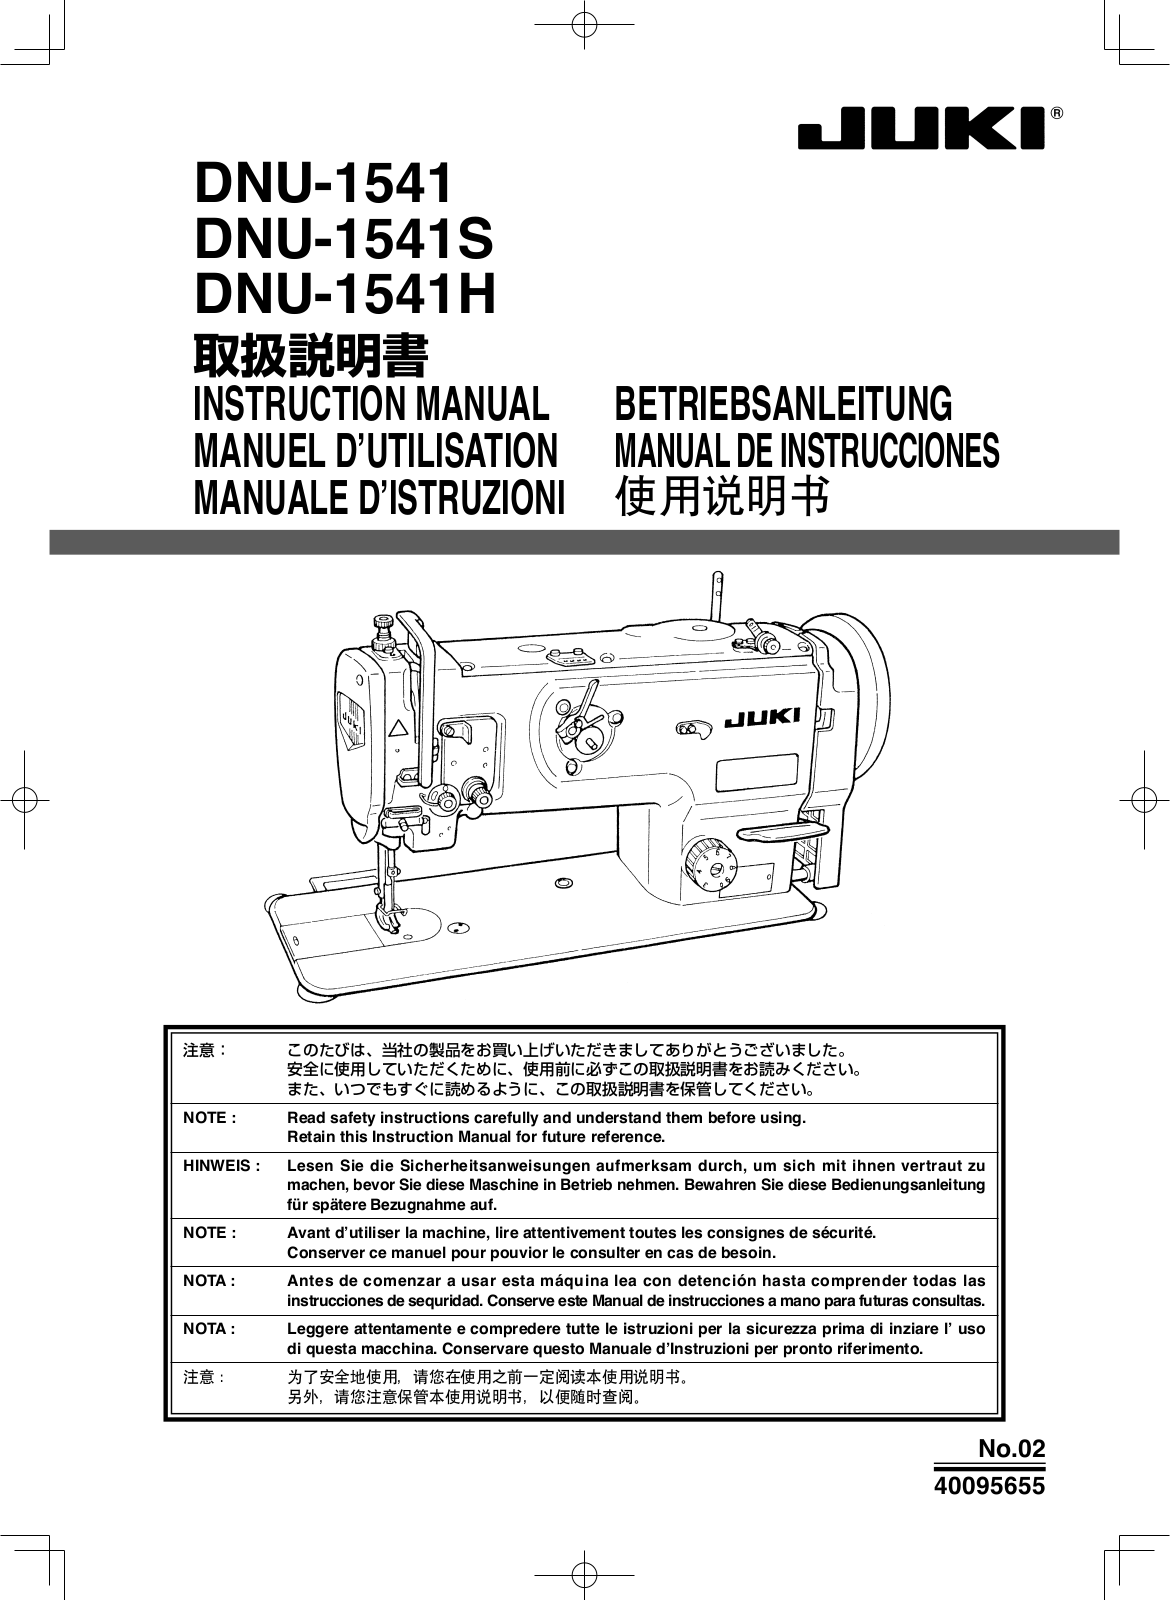 JUKI DNU-1541S Instruction Manual